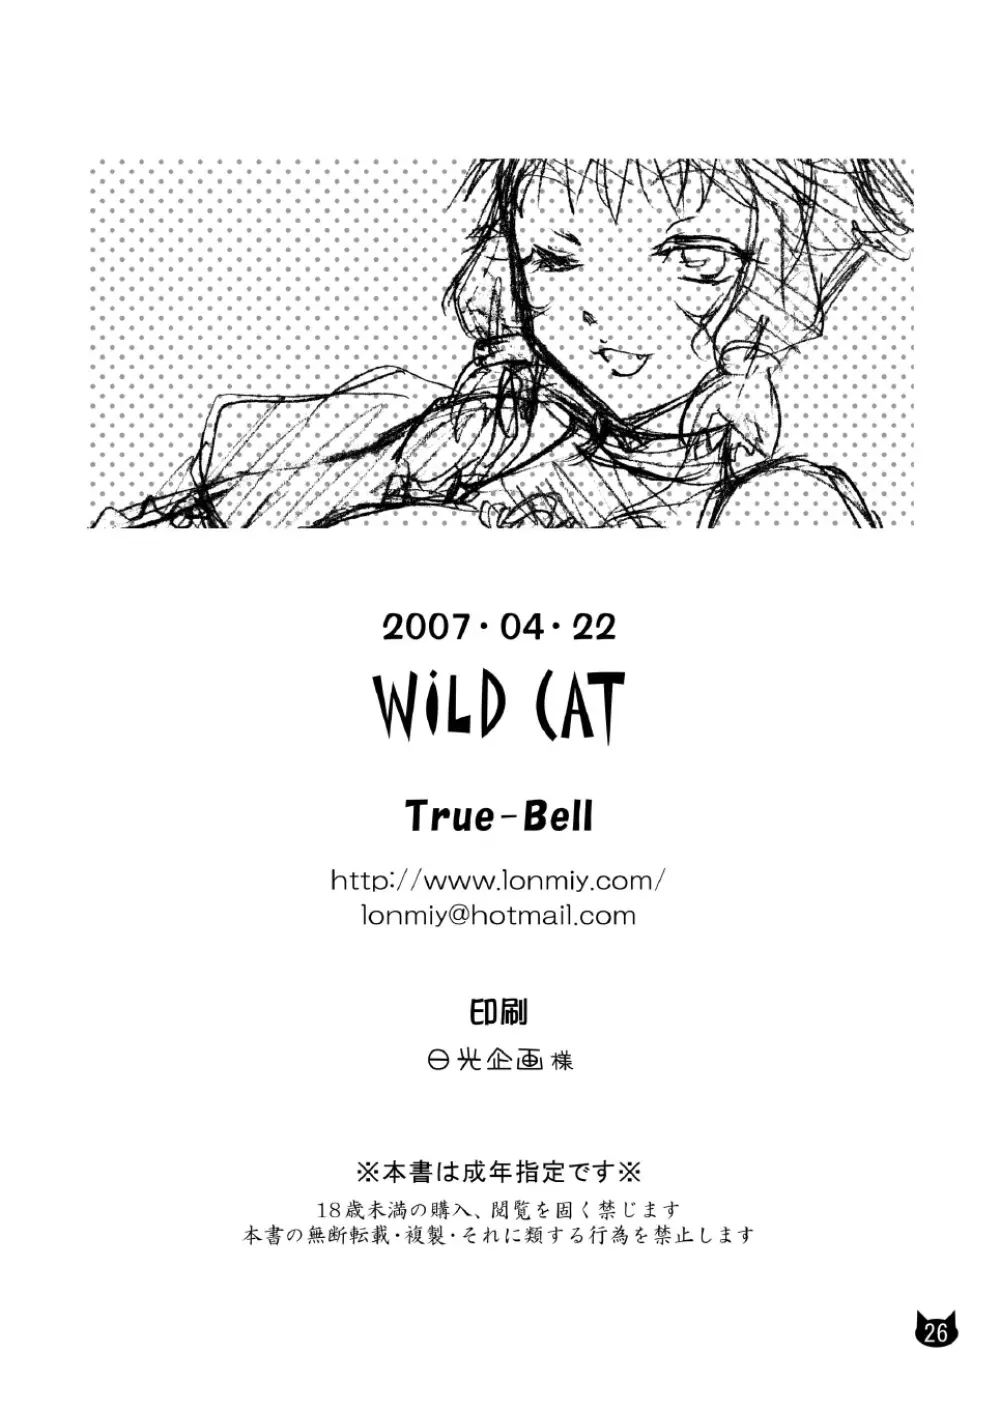 WILD CAT - page26